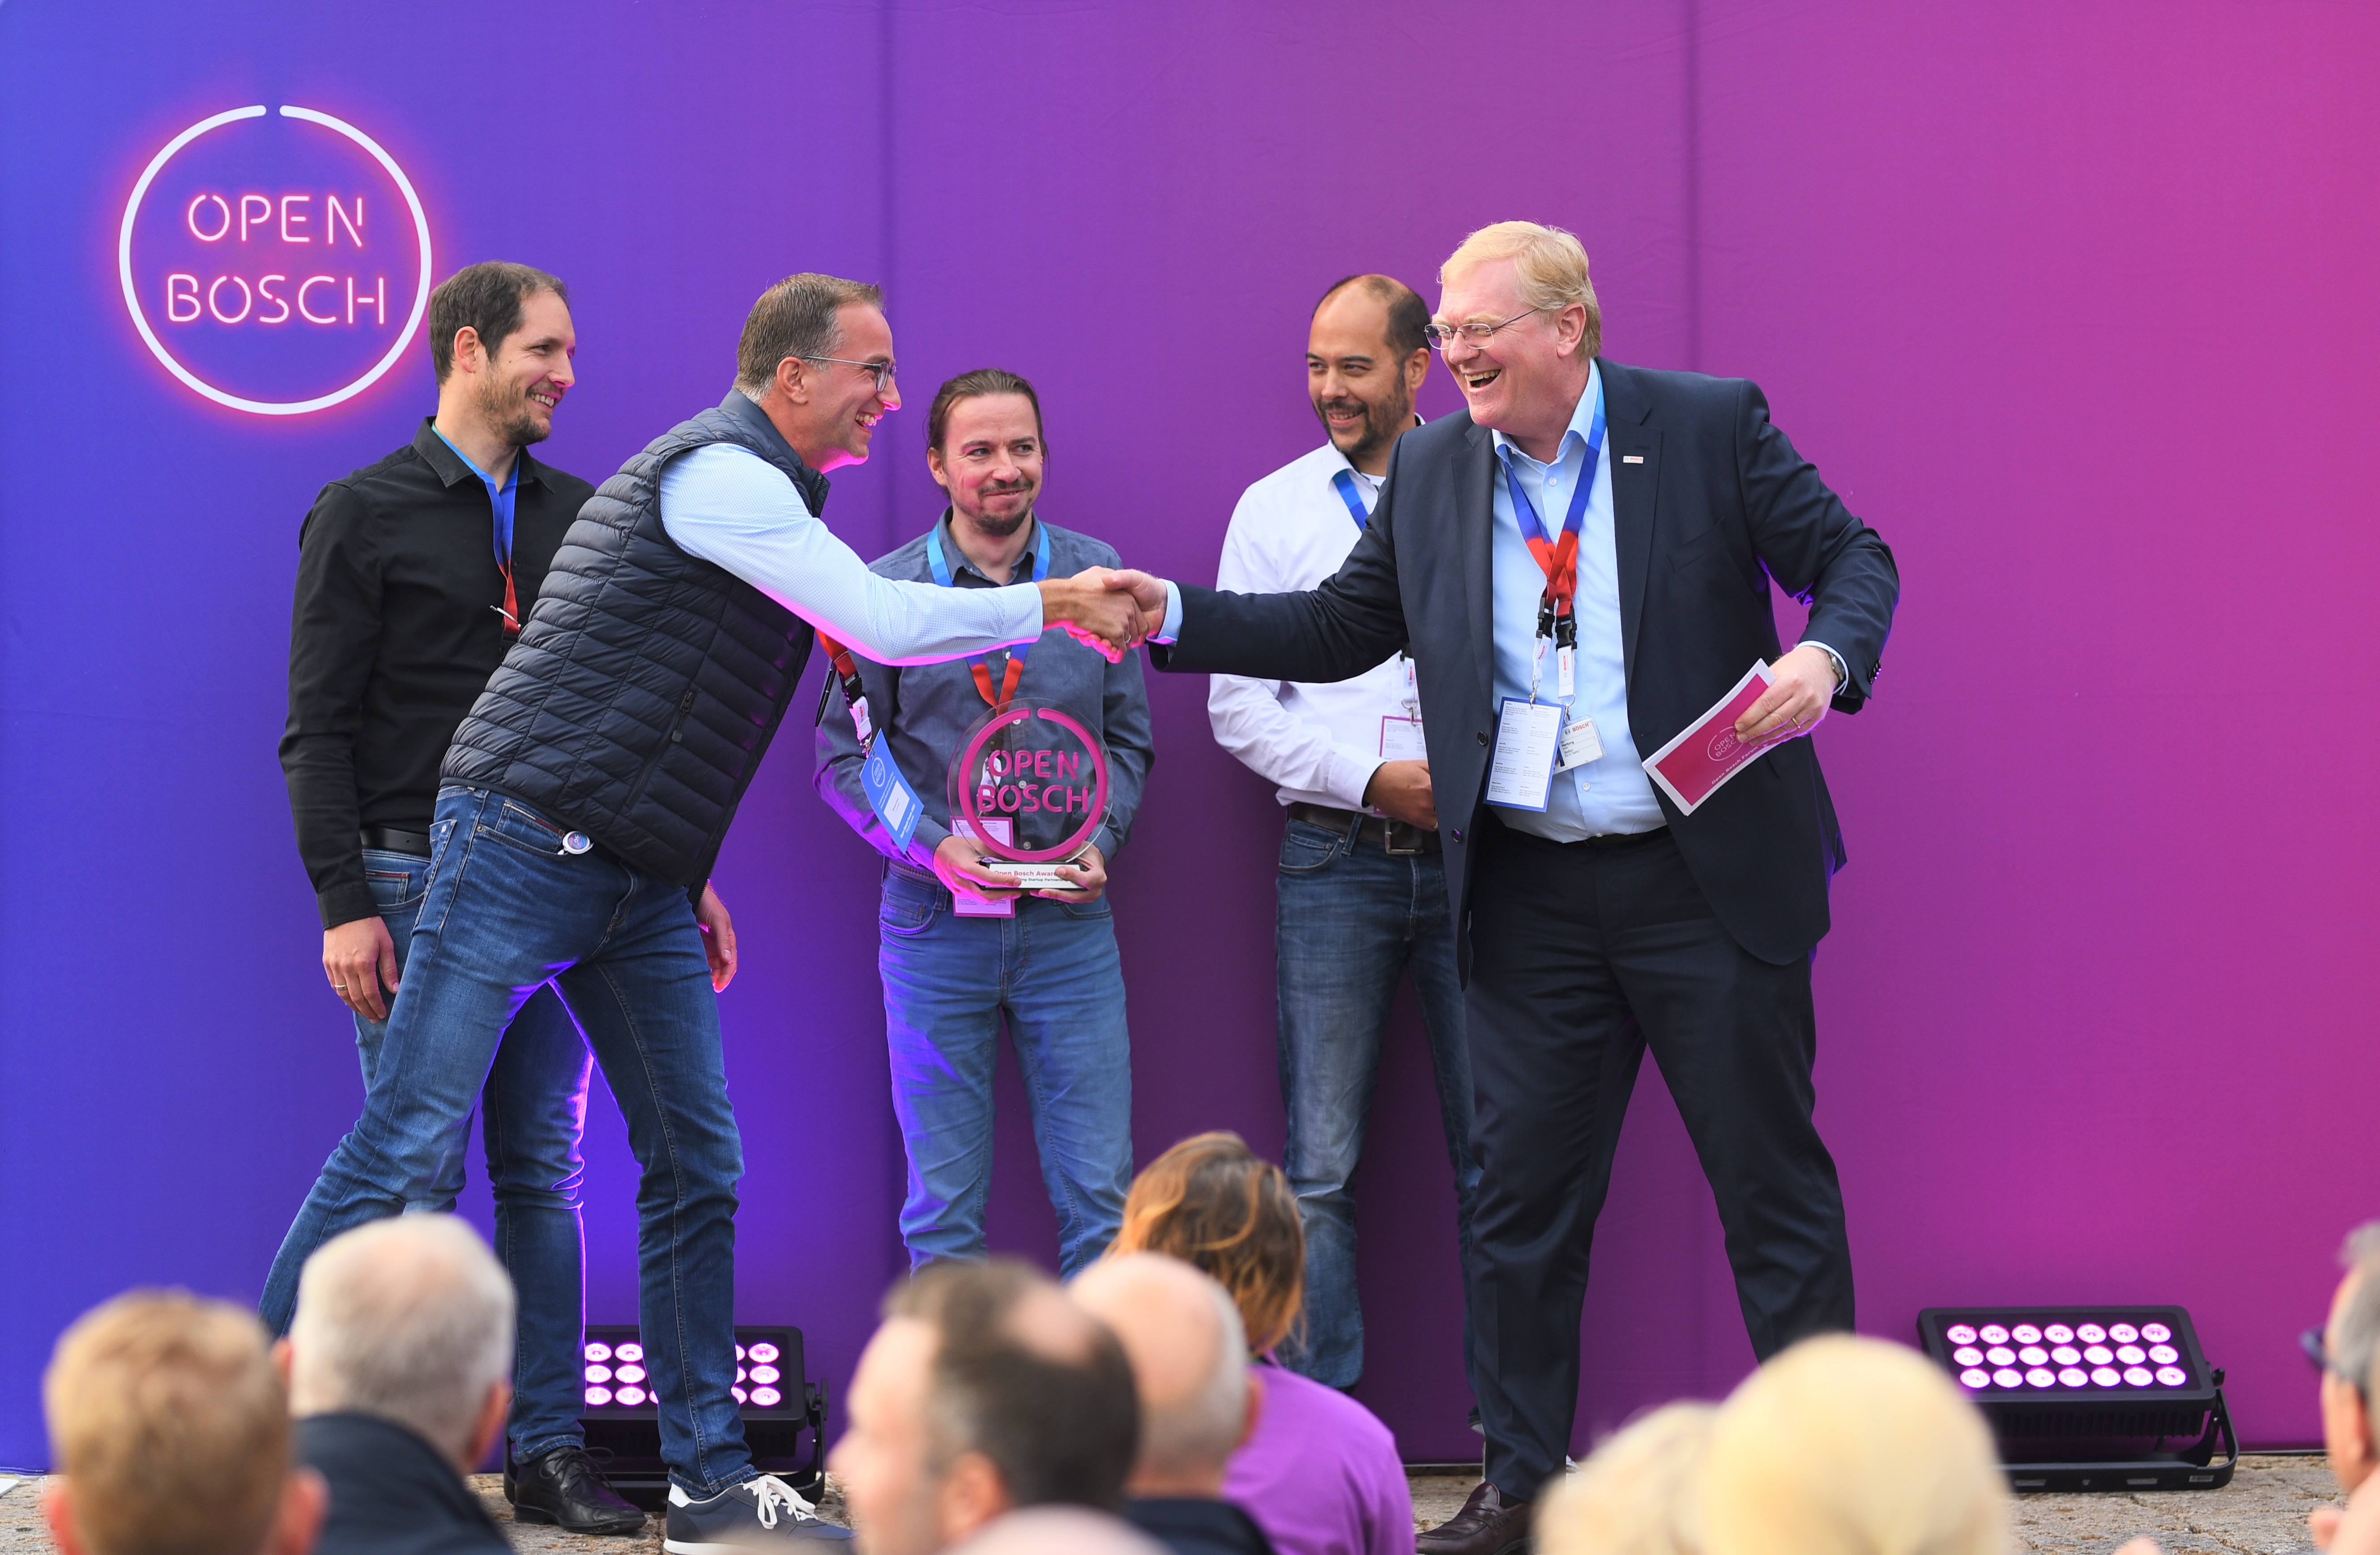 Open Bosch Award 2022 Winner on stage – Michael Kram (Bosch project representative); Philipp Crocoll (COO), Julius Ziegler (CTO) and Henning Lategahn (CEO Atlatec); Dr. Stefan Hartung (Chairman of the Board of Management of Robert Bosch GmbH)